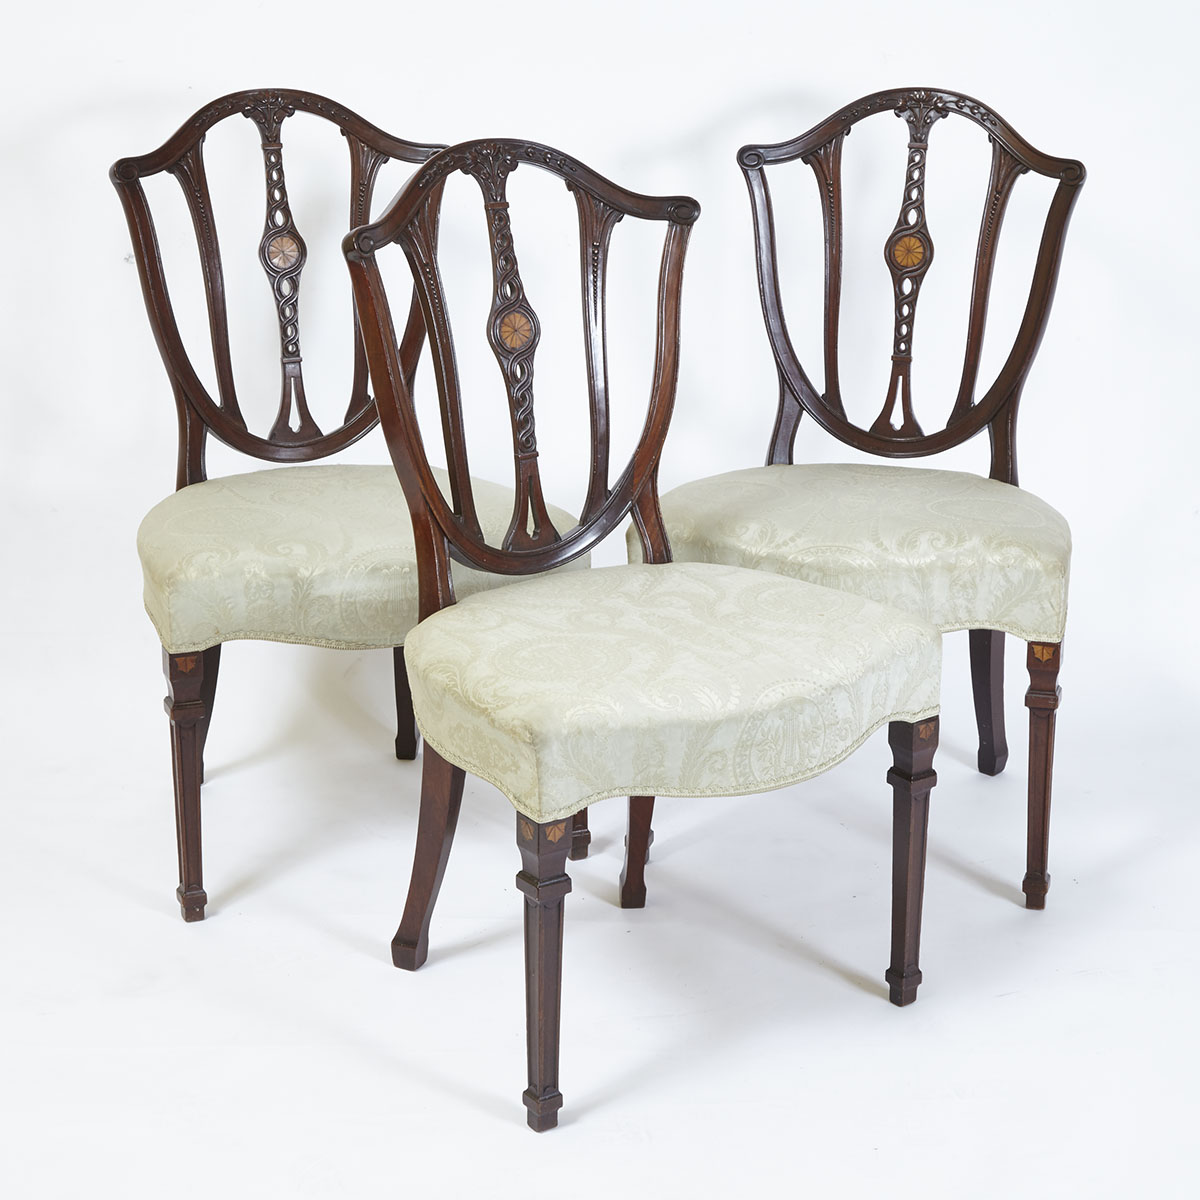 Set of Three Hepplewhite Style Mahogany Side Chairs, English, late 18th century